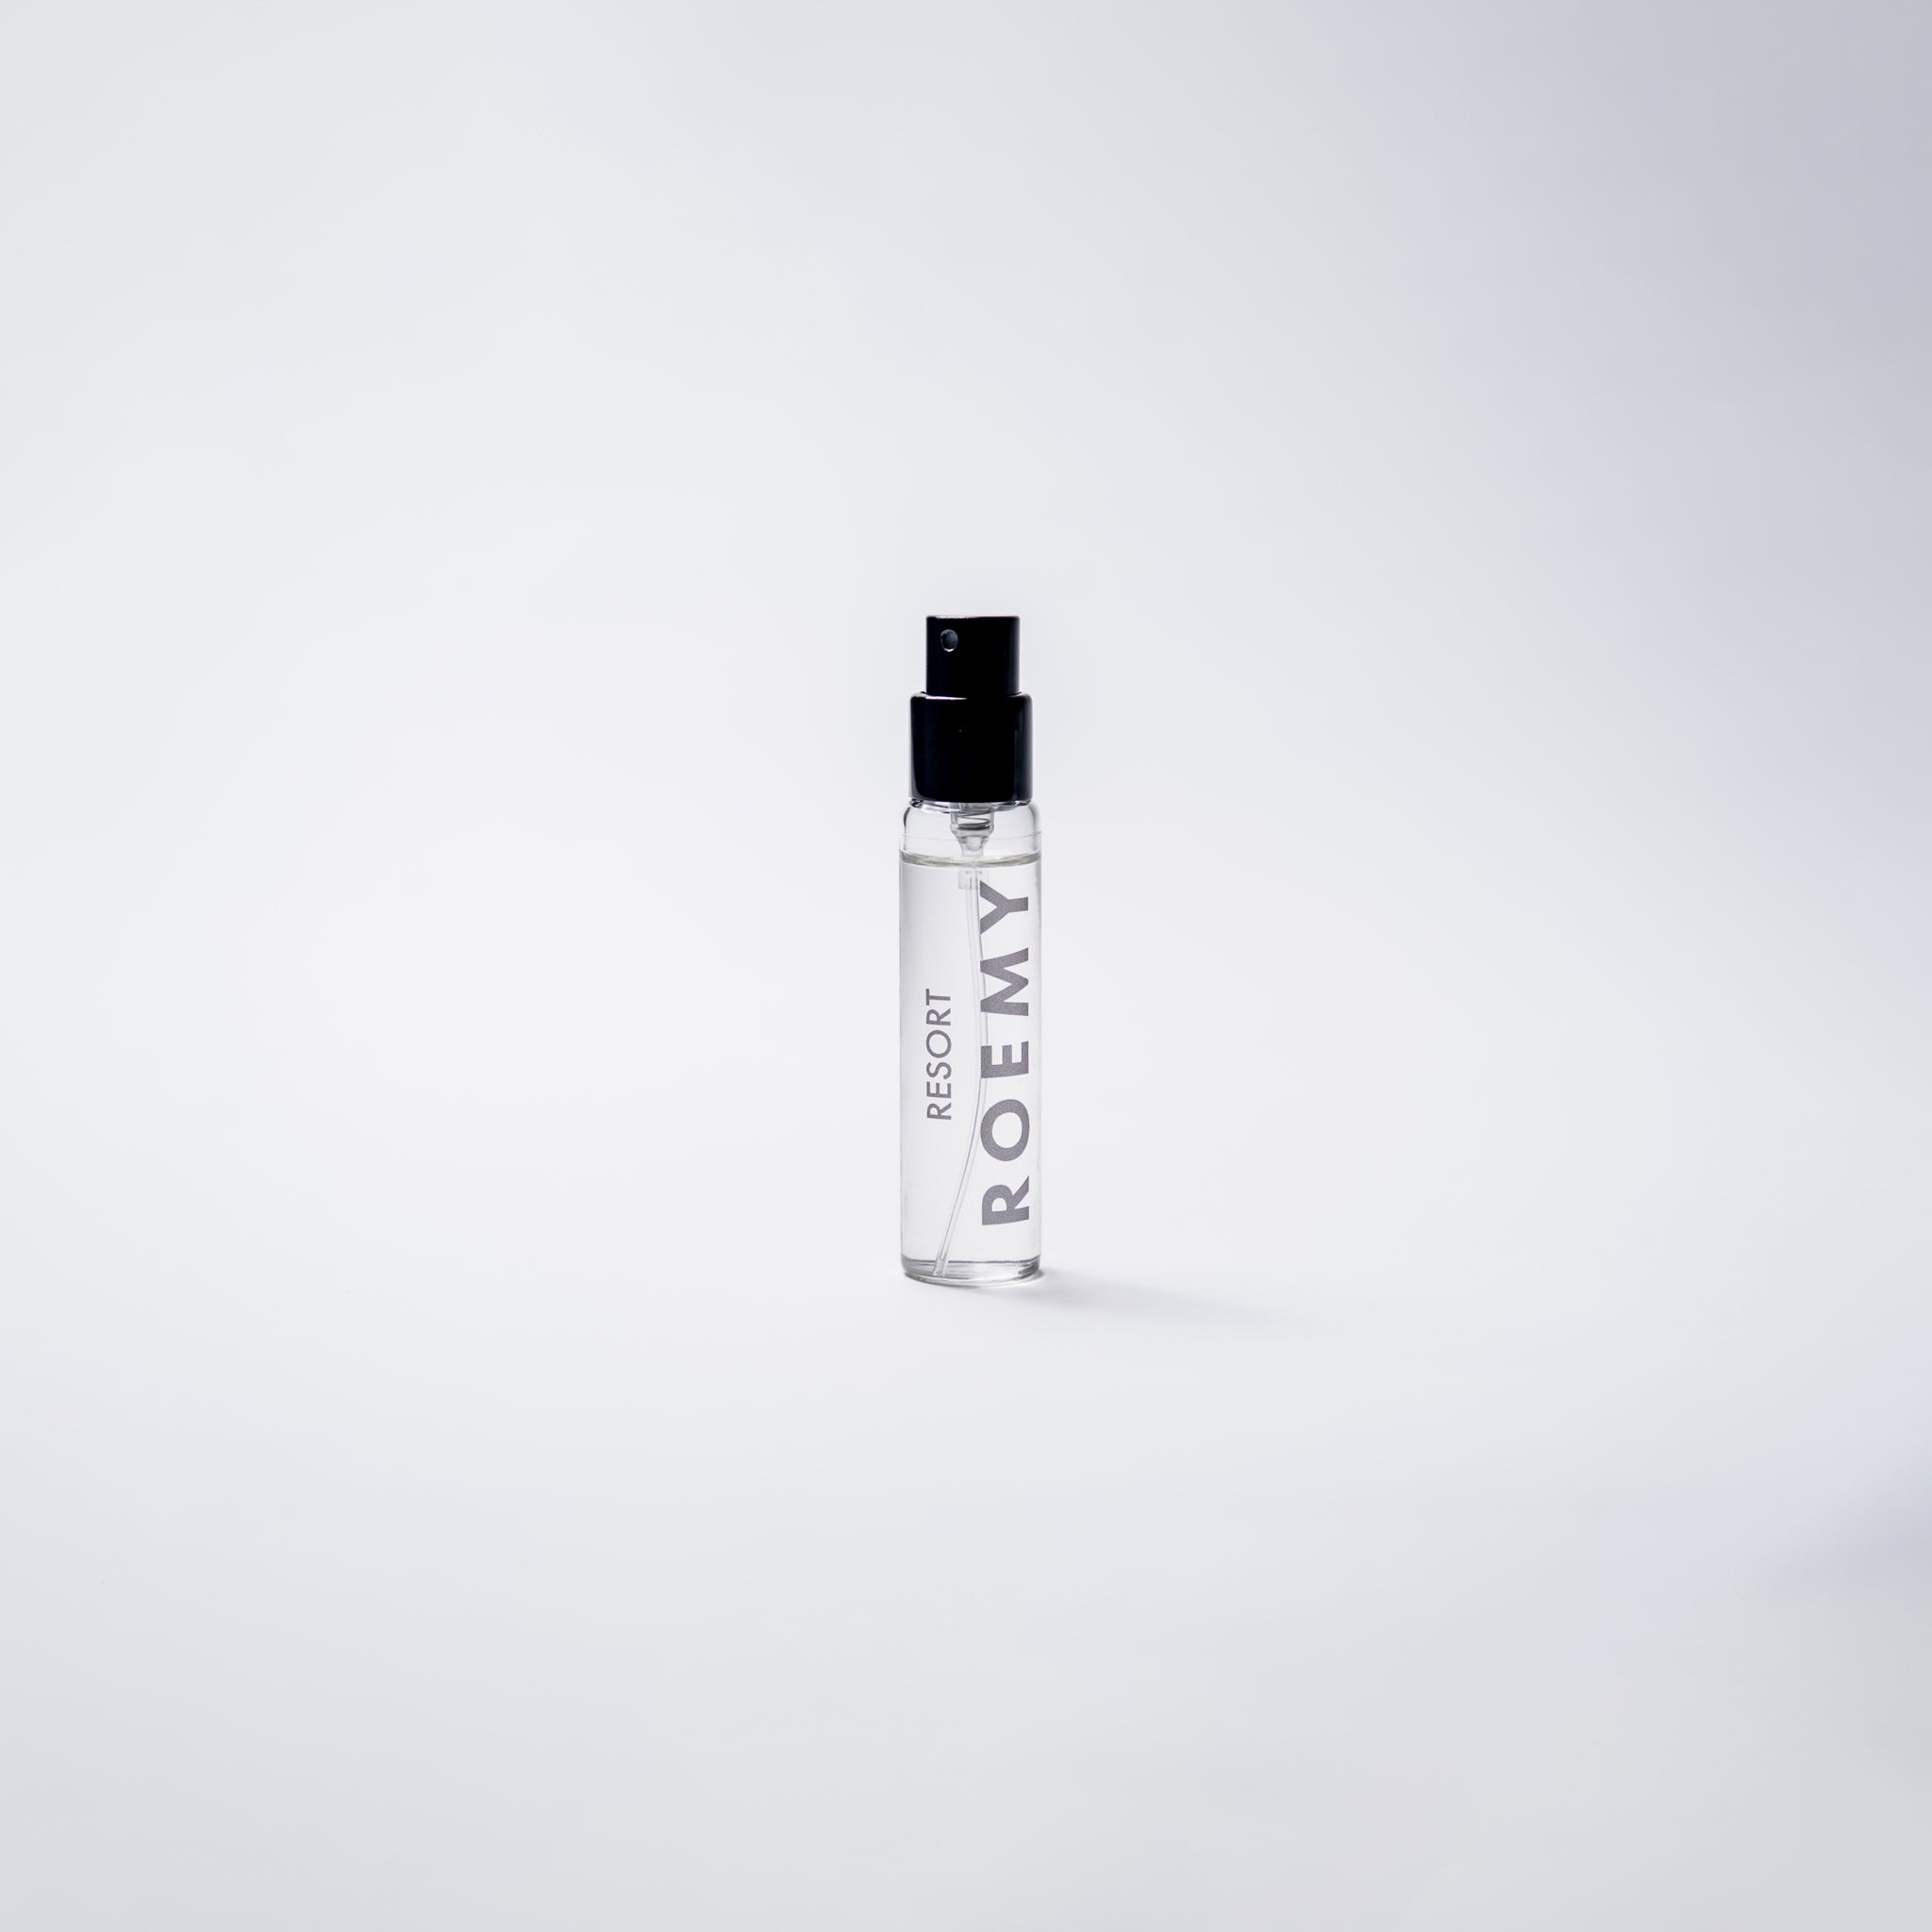 ROEMY Resort 15mL Traveller Parfum - front